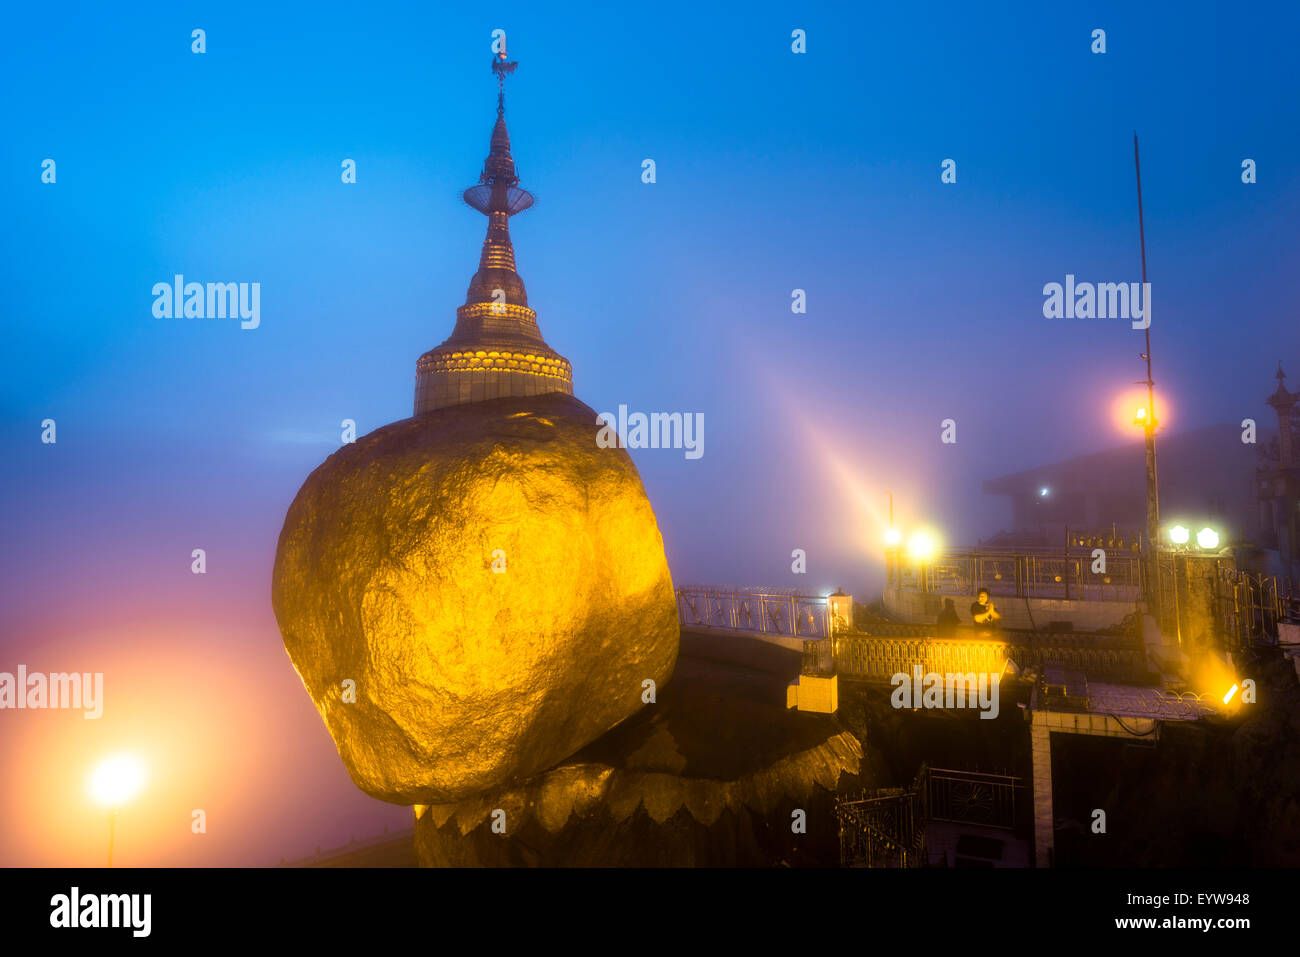 Golden Rock at dusk with Kyaiktiyo Pagoda, Kyaikto, Thaton District, Mon State, Myanmar, Myanmar Stock Photo